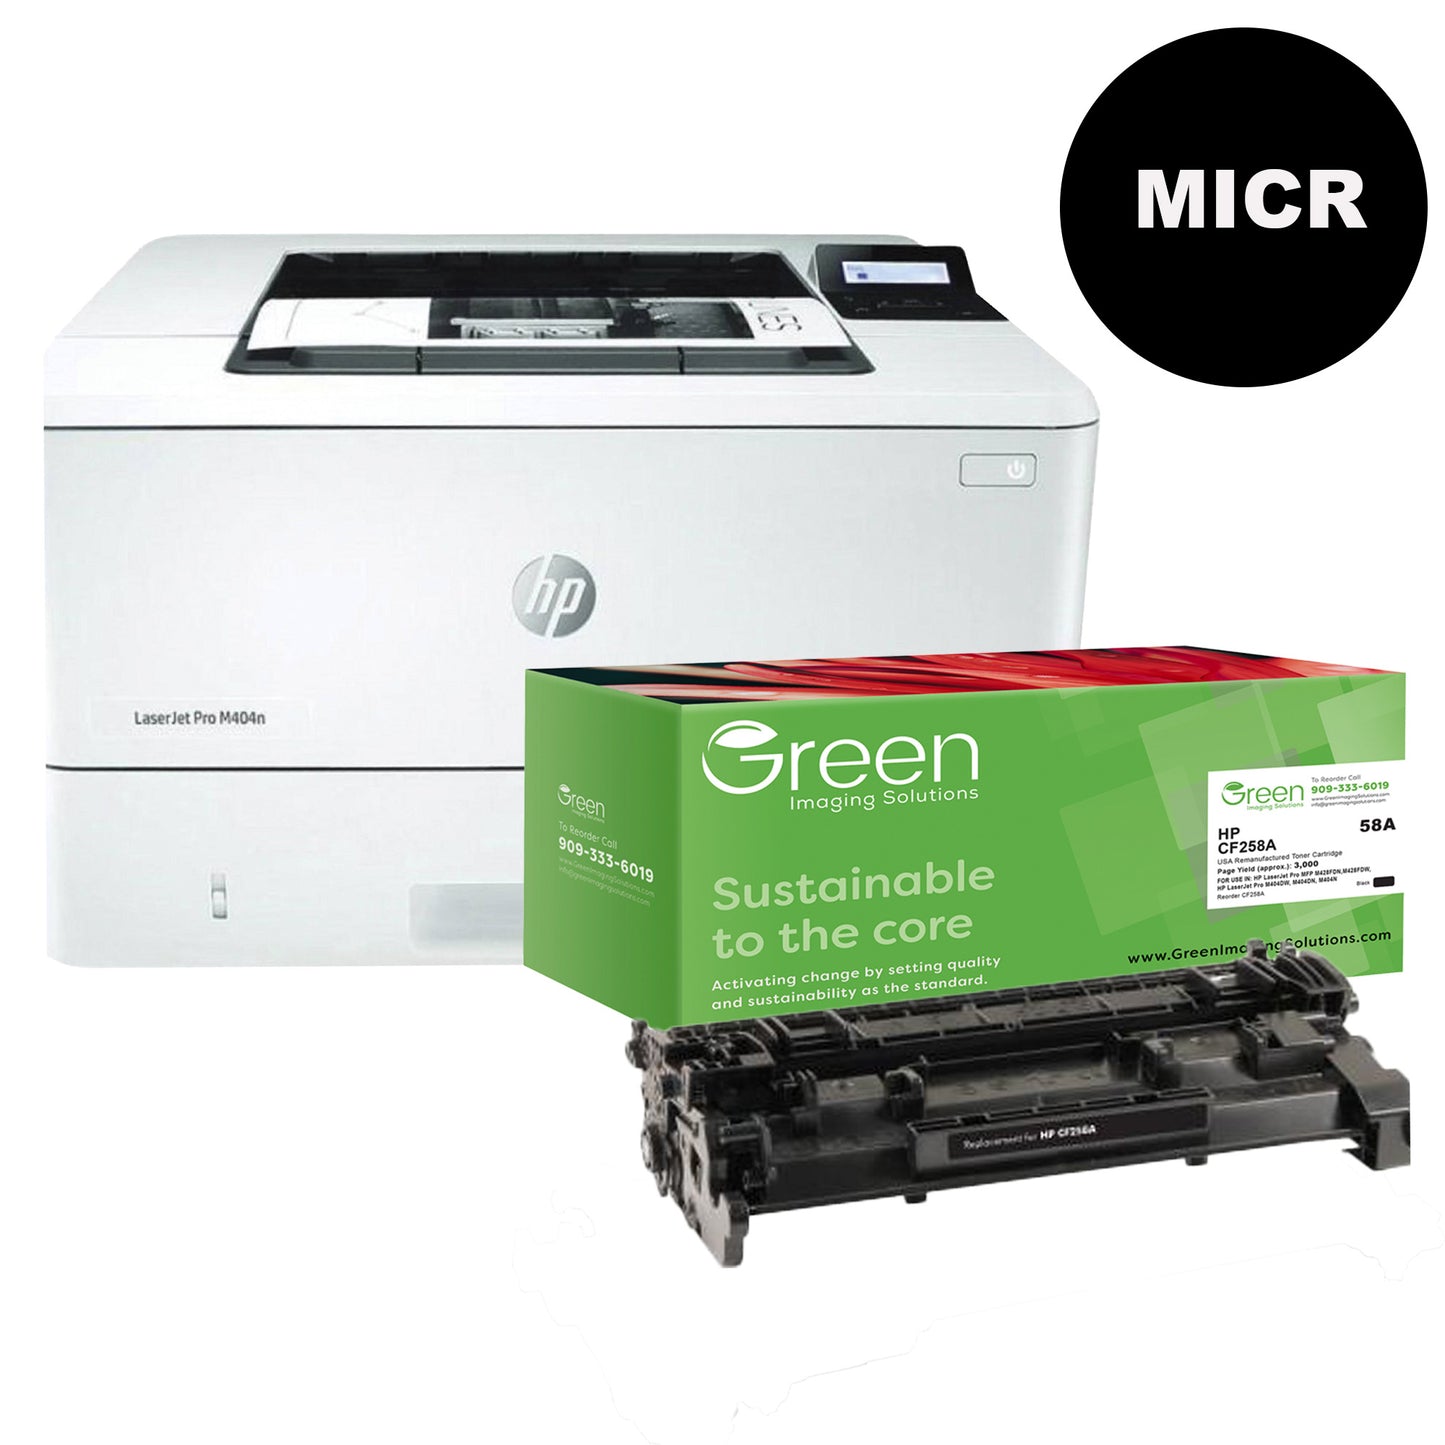 MICR Printer Bundle - M404N with 58A Toner